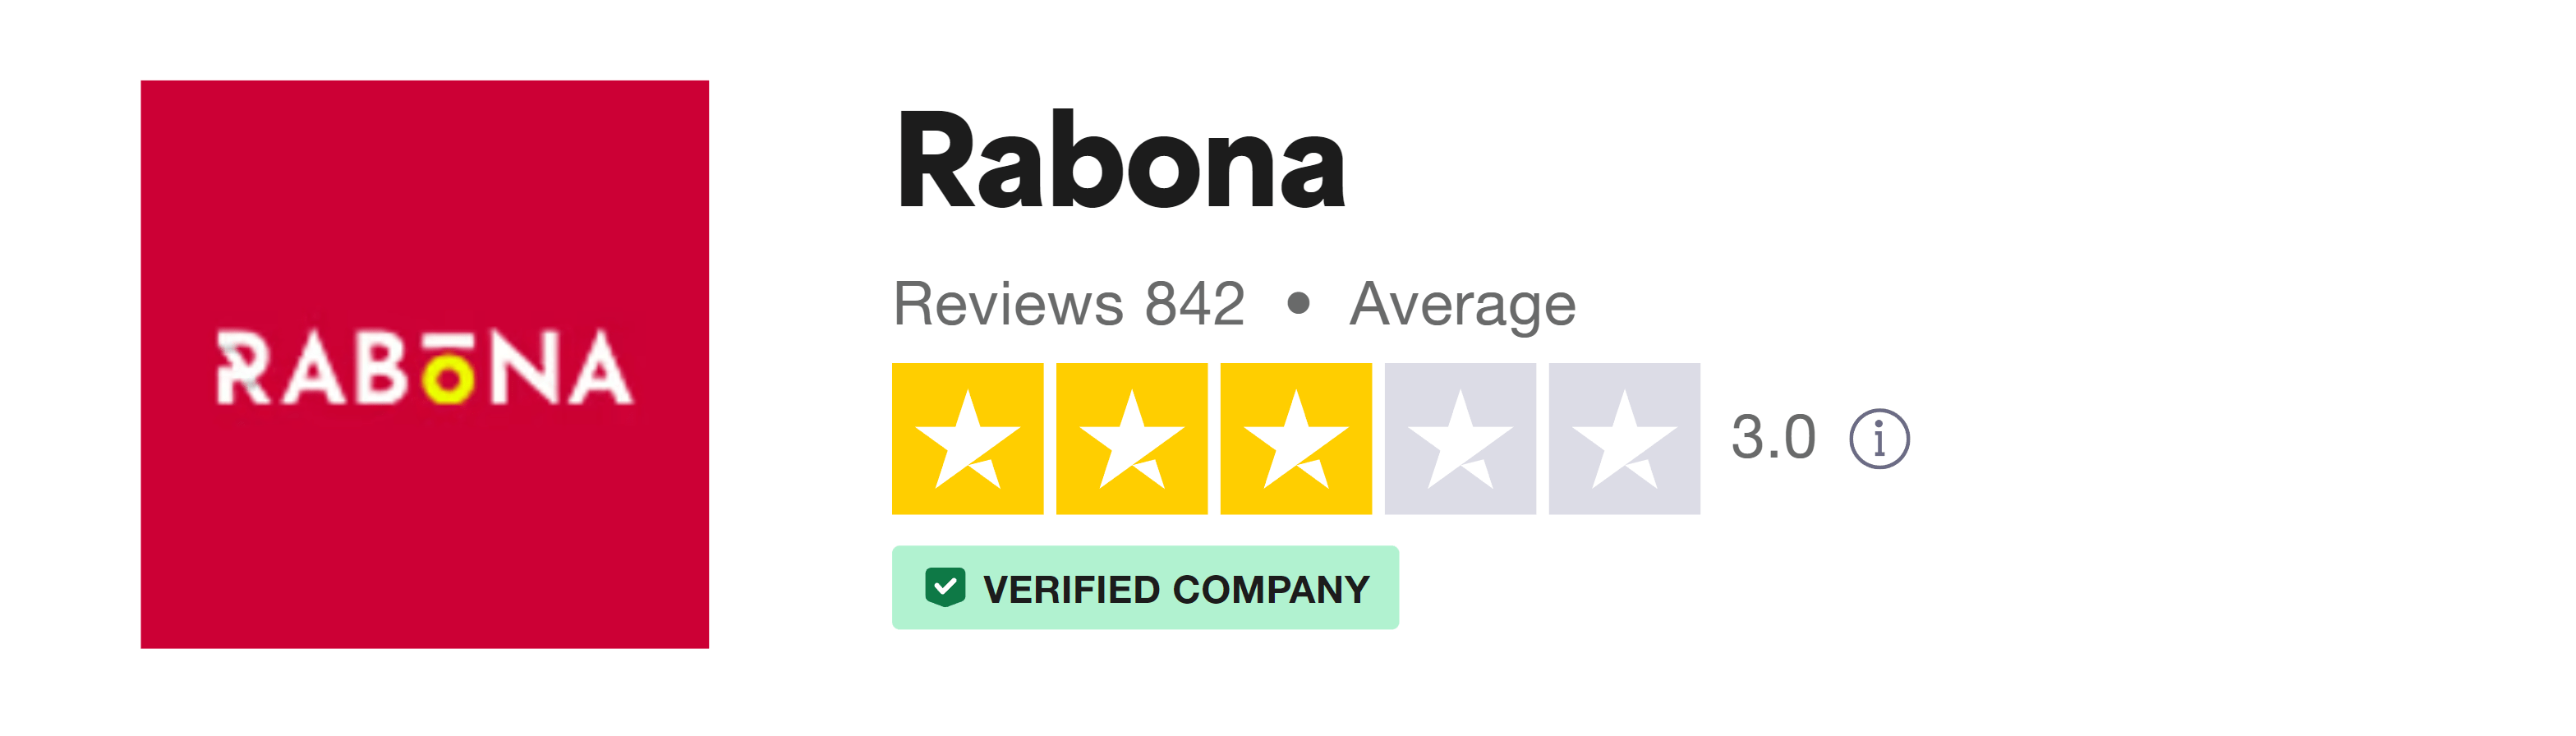 Trustpilot rating screenshot for the Rabona